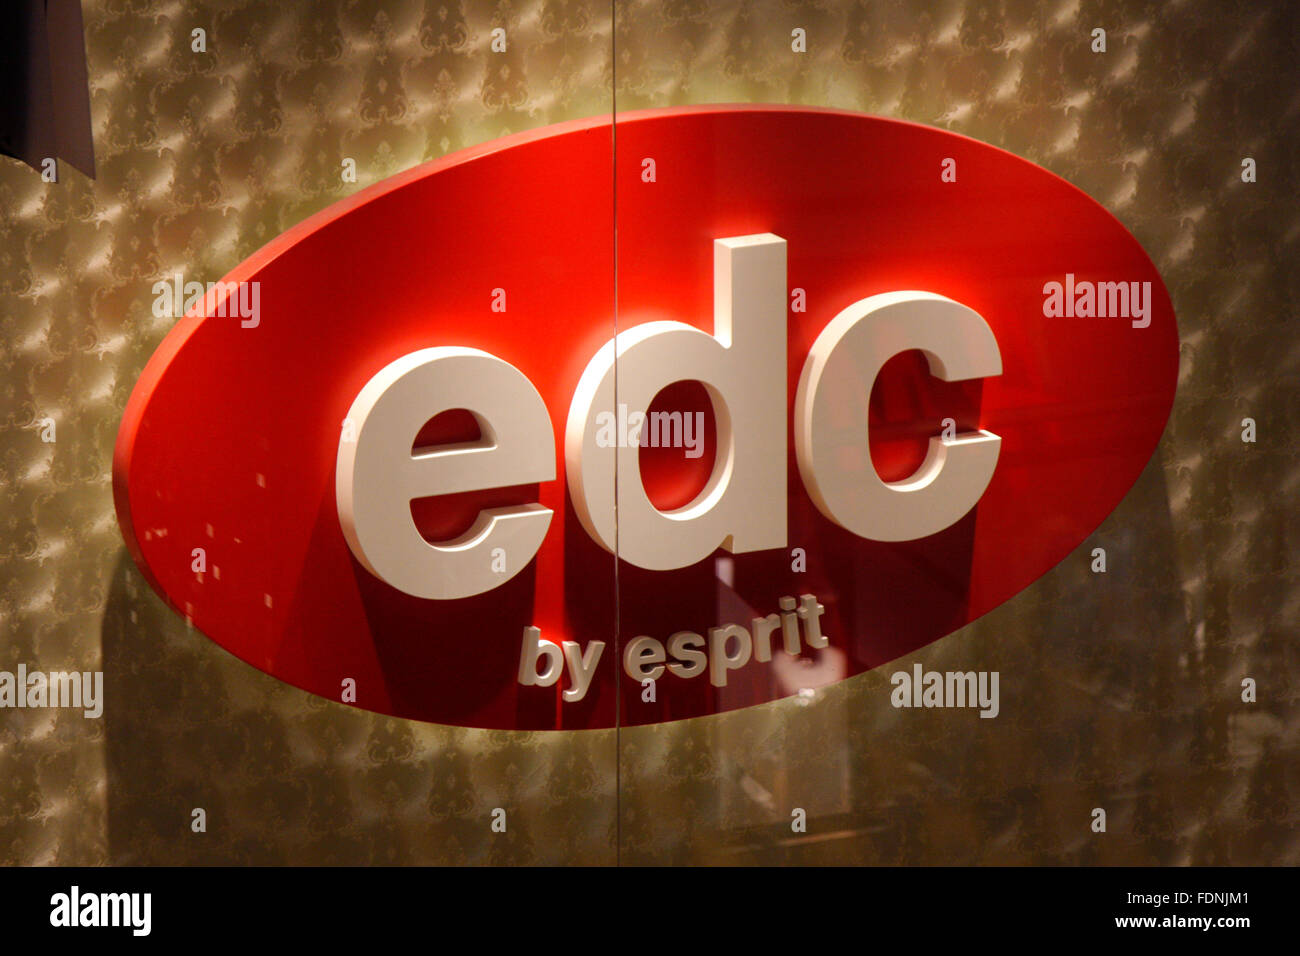 Markenname: "edc by esprit" , Berlin Stock Photo - Alamy